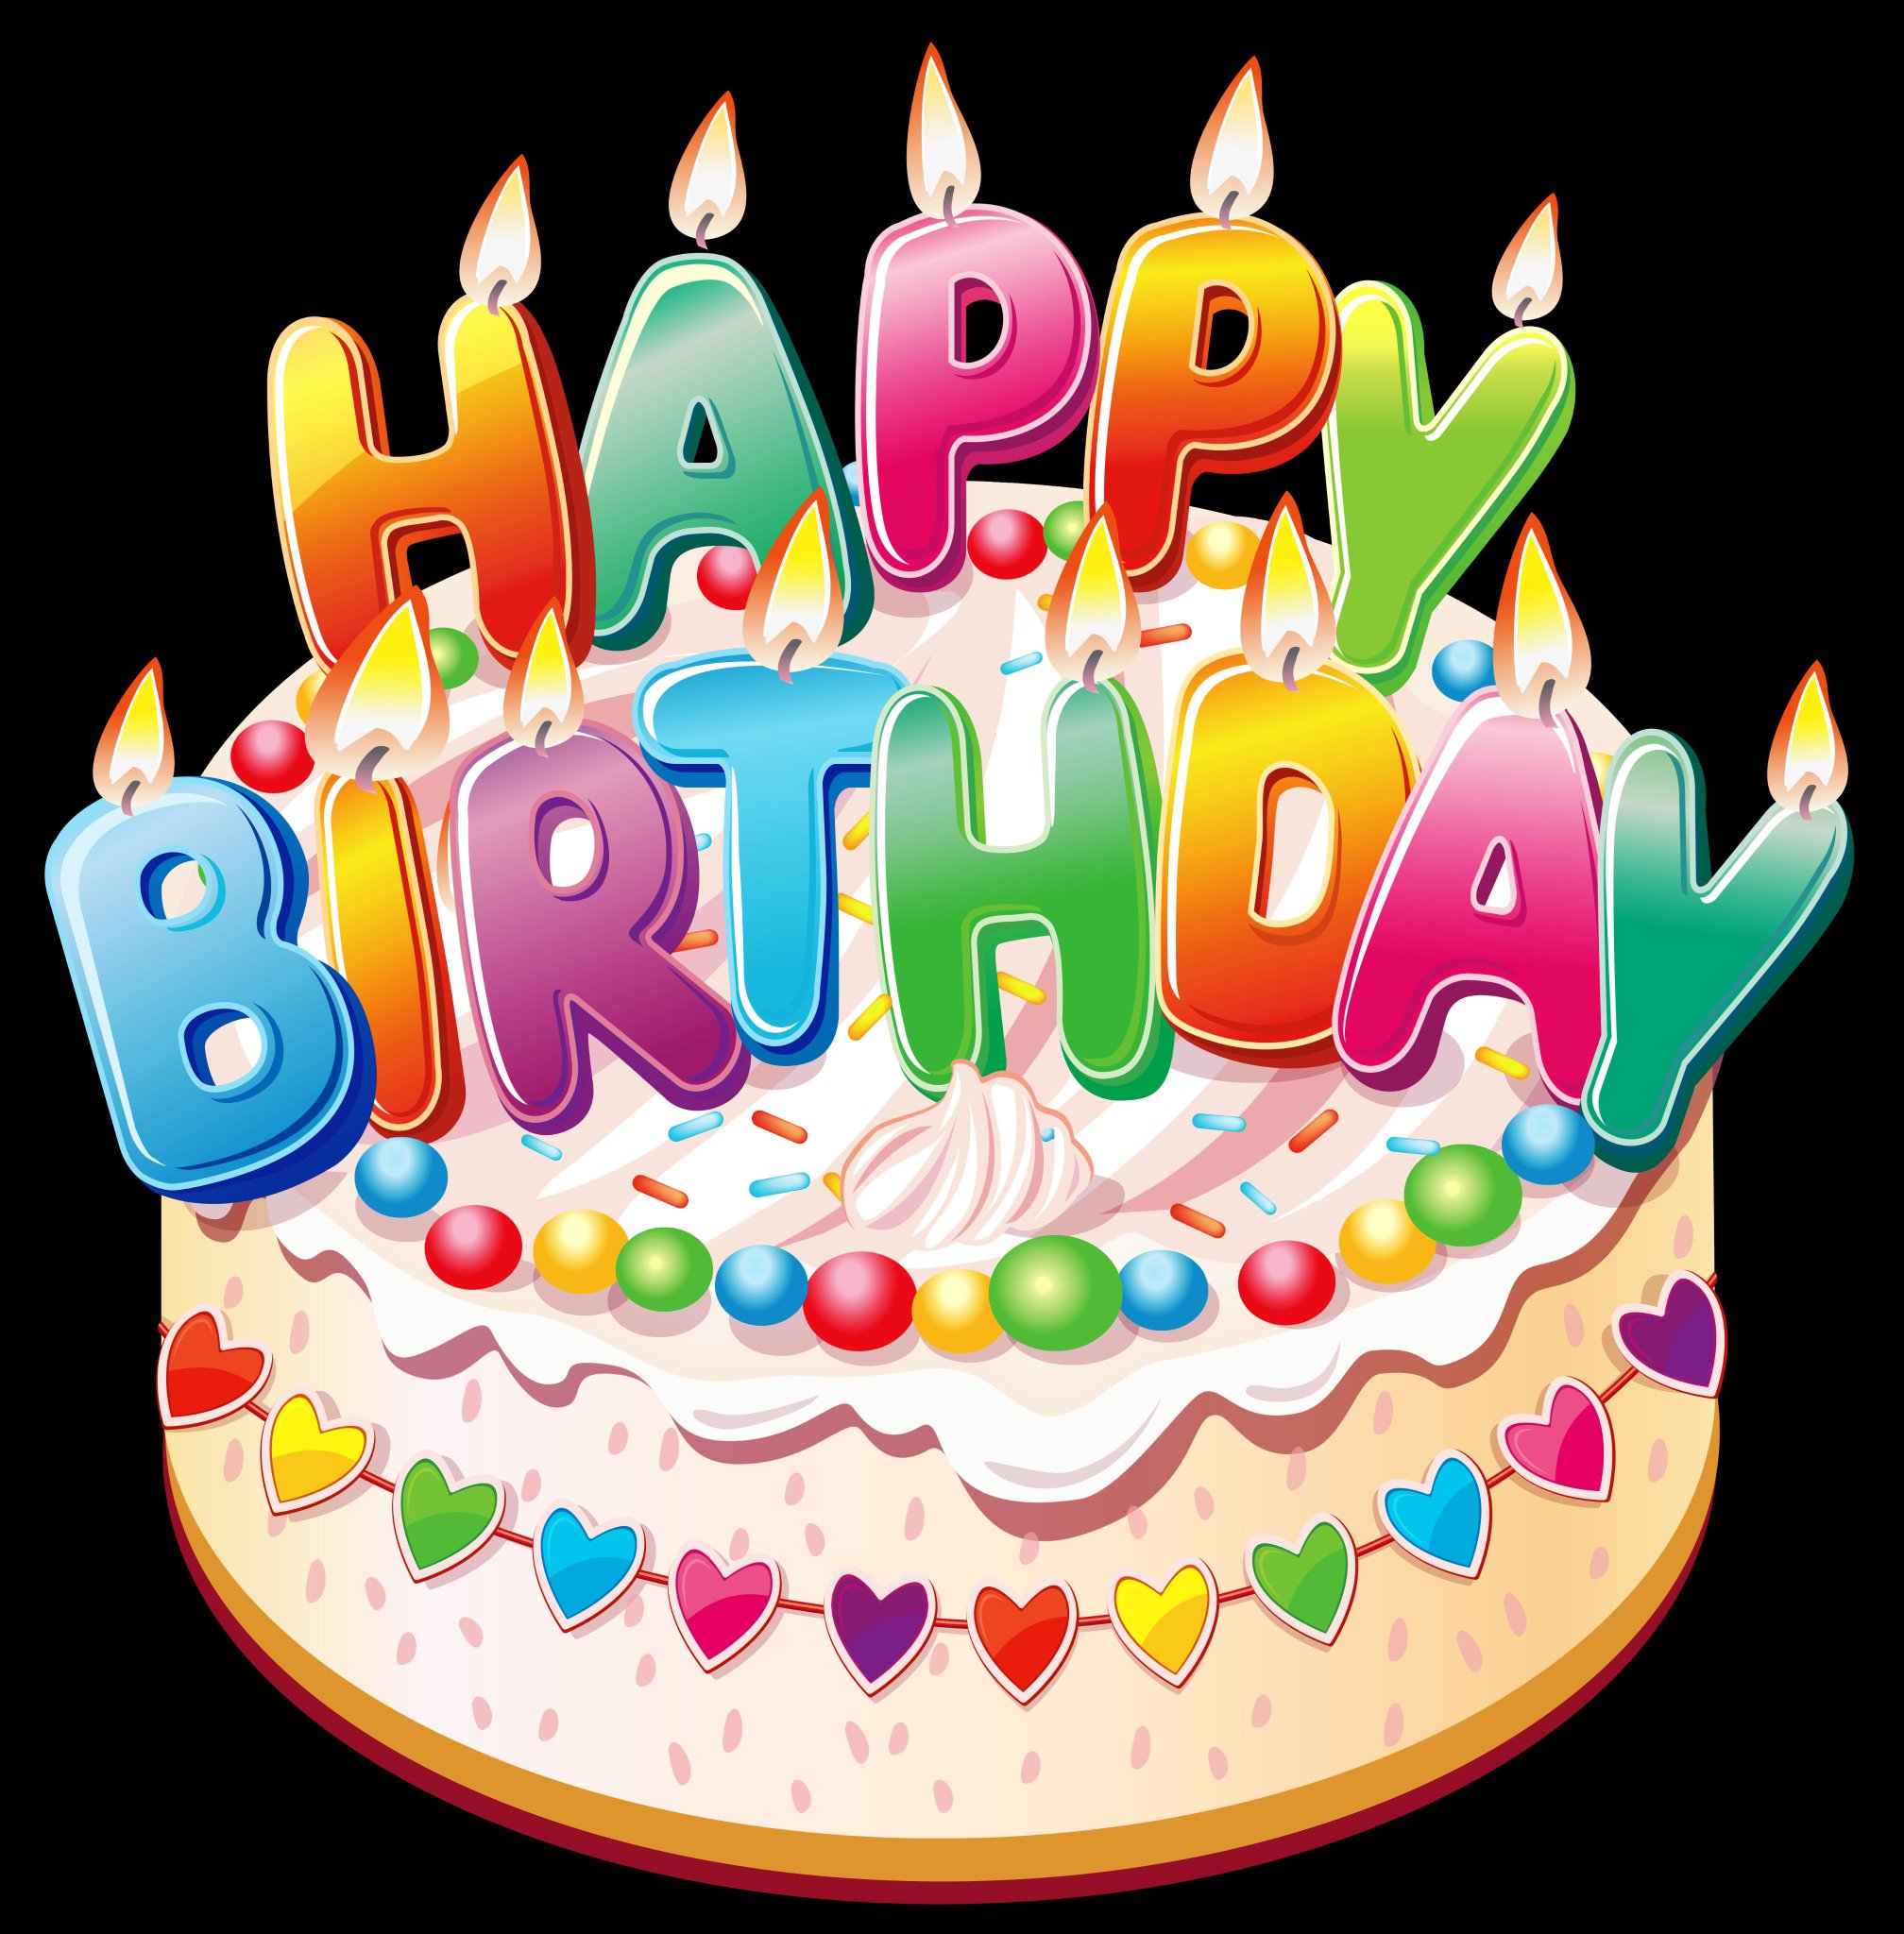 Wishing my friend Frank Ashmore a Very Happy Birthday!!!! 